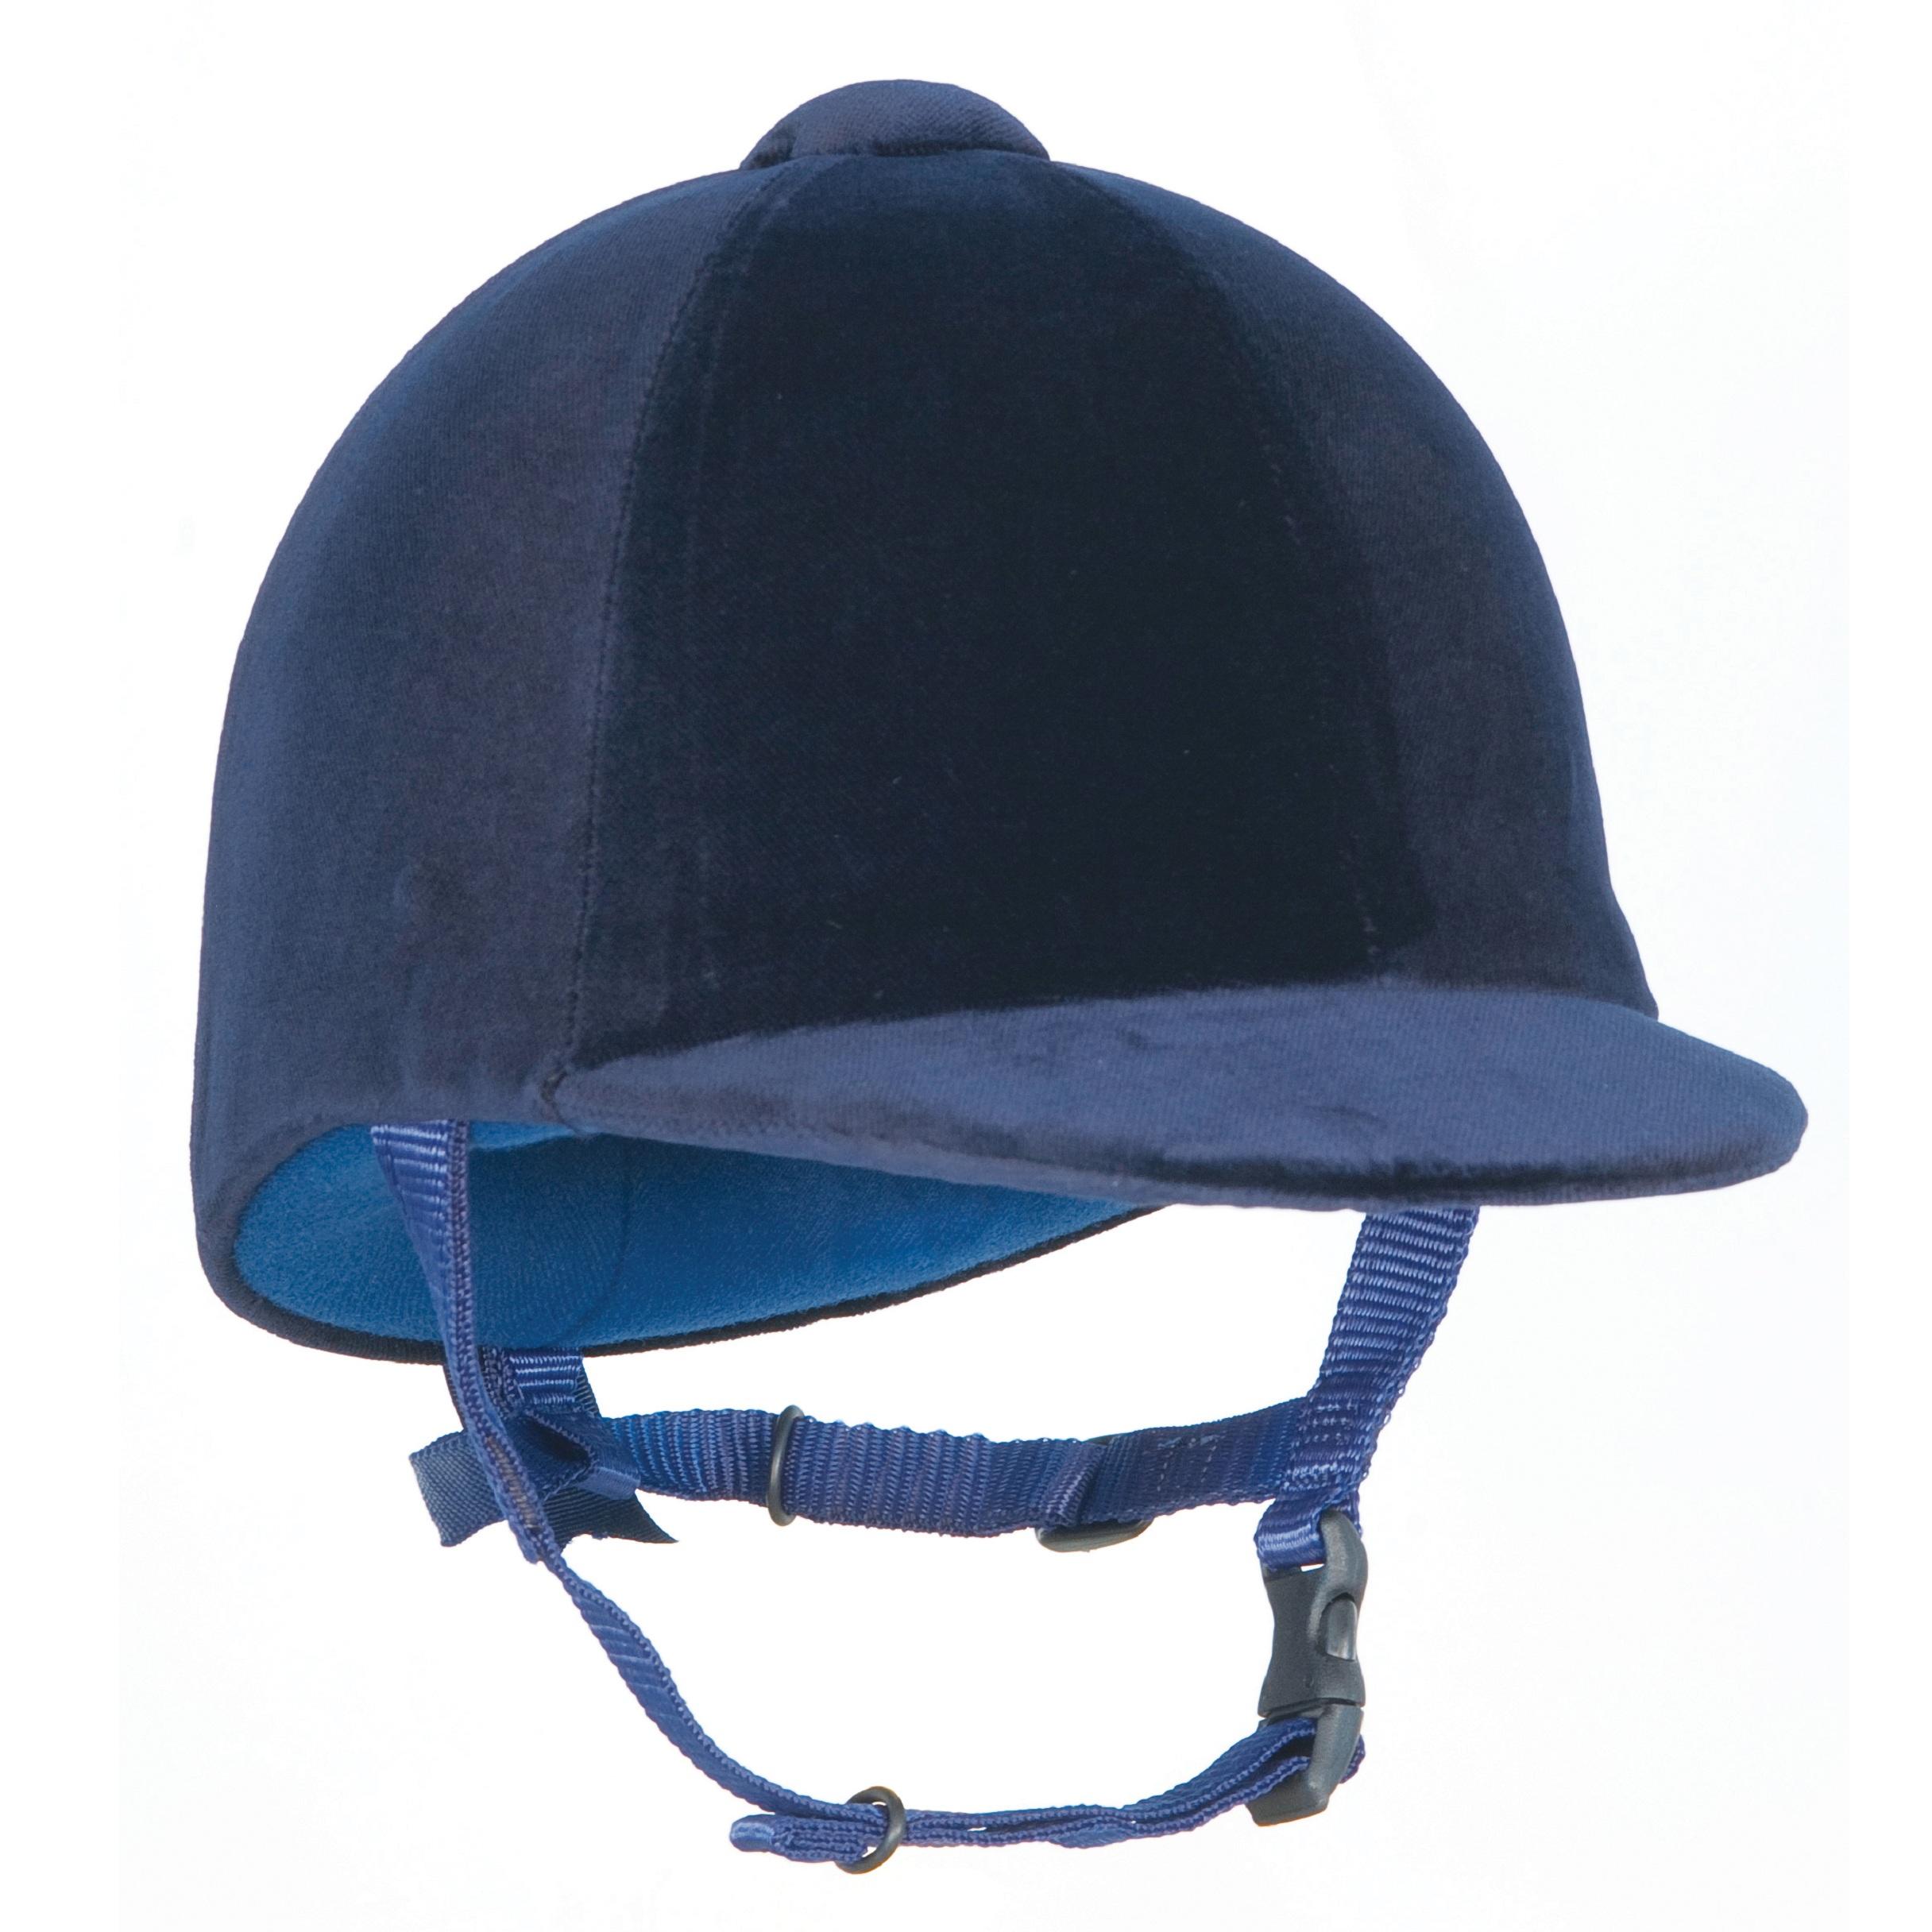 CPX-3000 Junior Riding Hat Blue 1/2